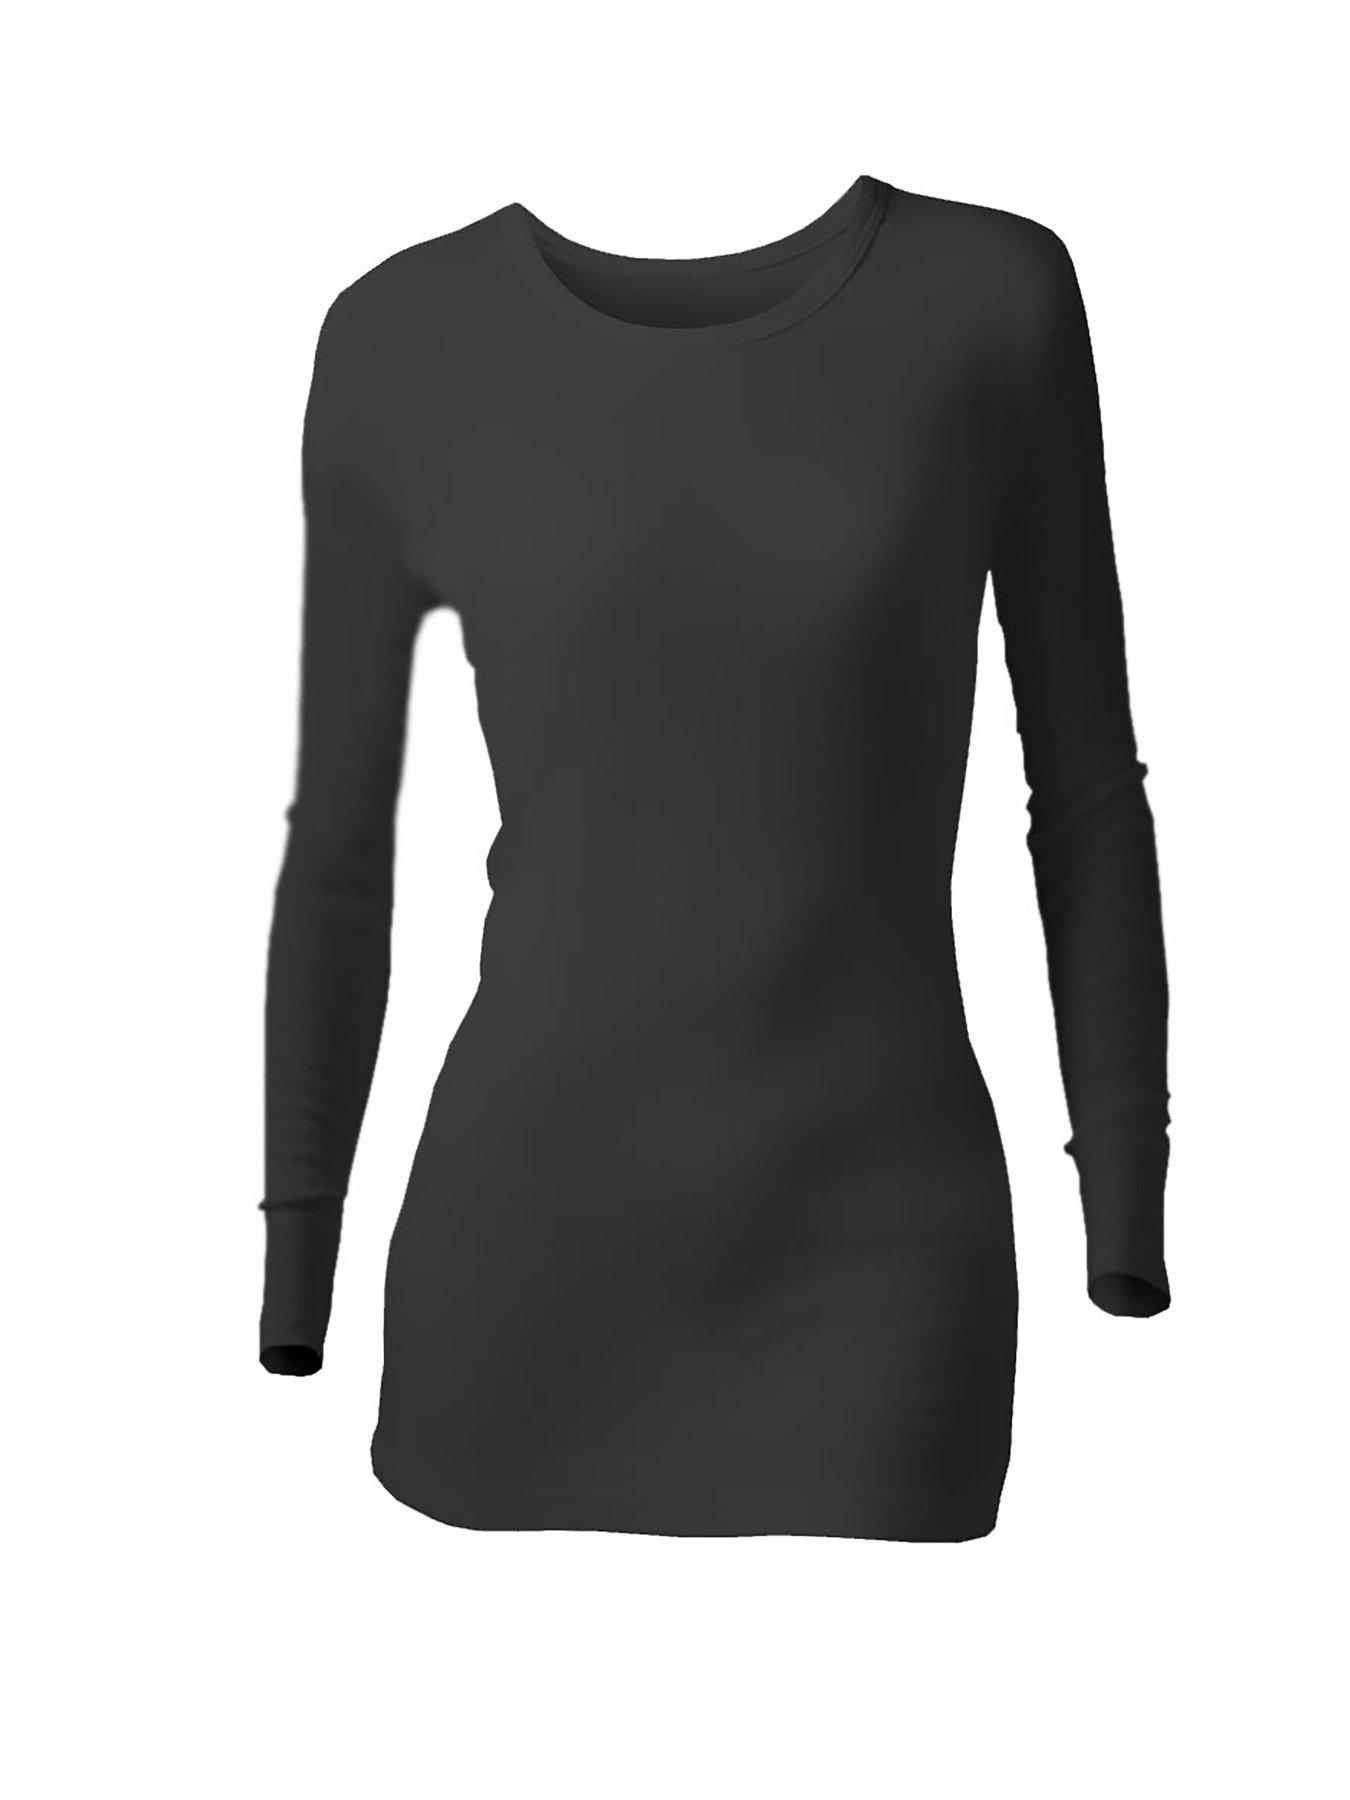 HEAT HOLDERS - Womens Winter Warm Thermal Underwear Long Sleeve Shirt/Top